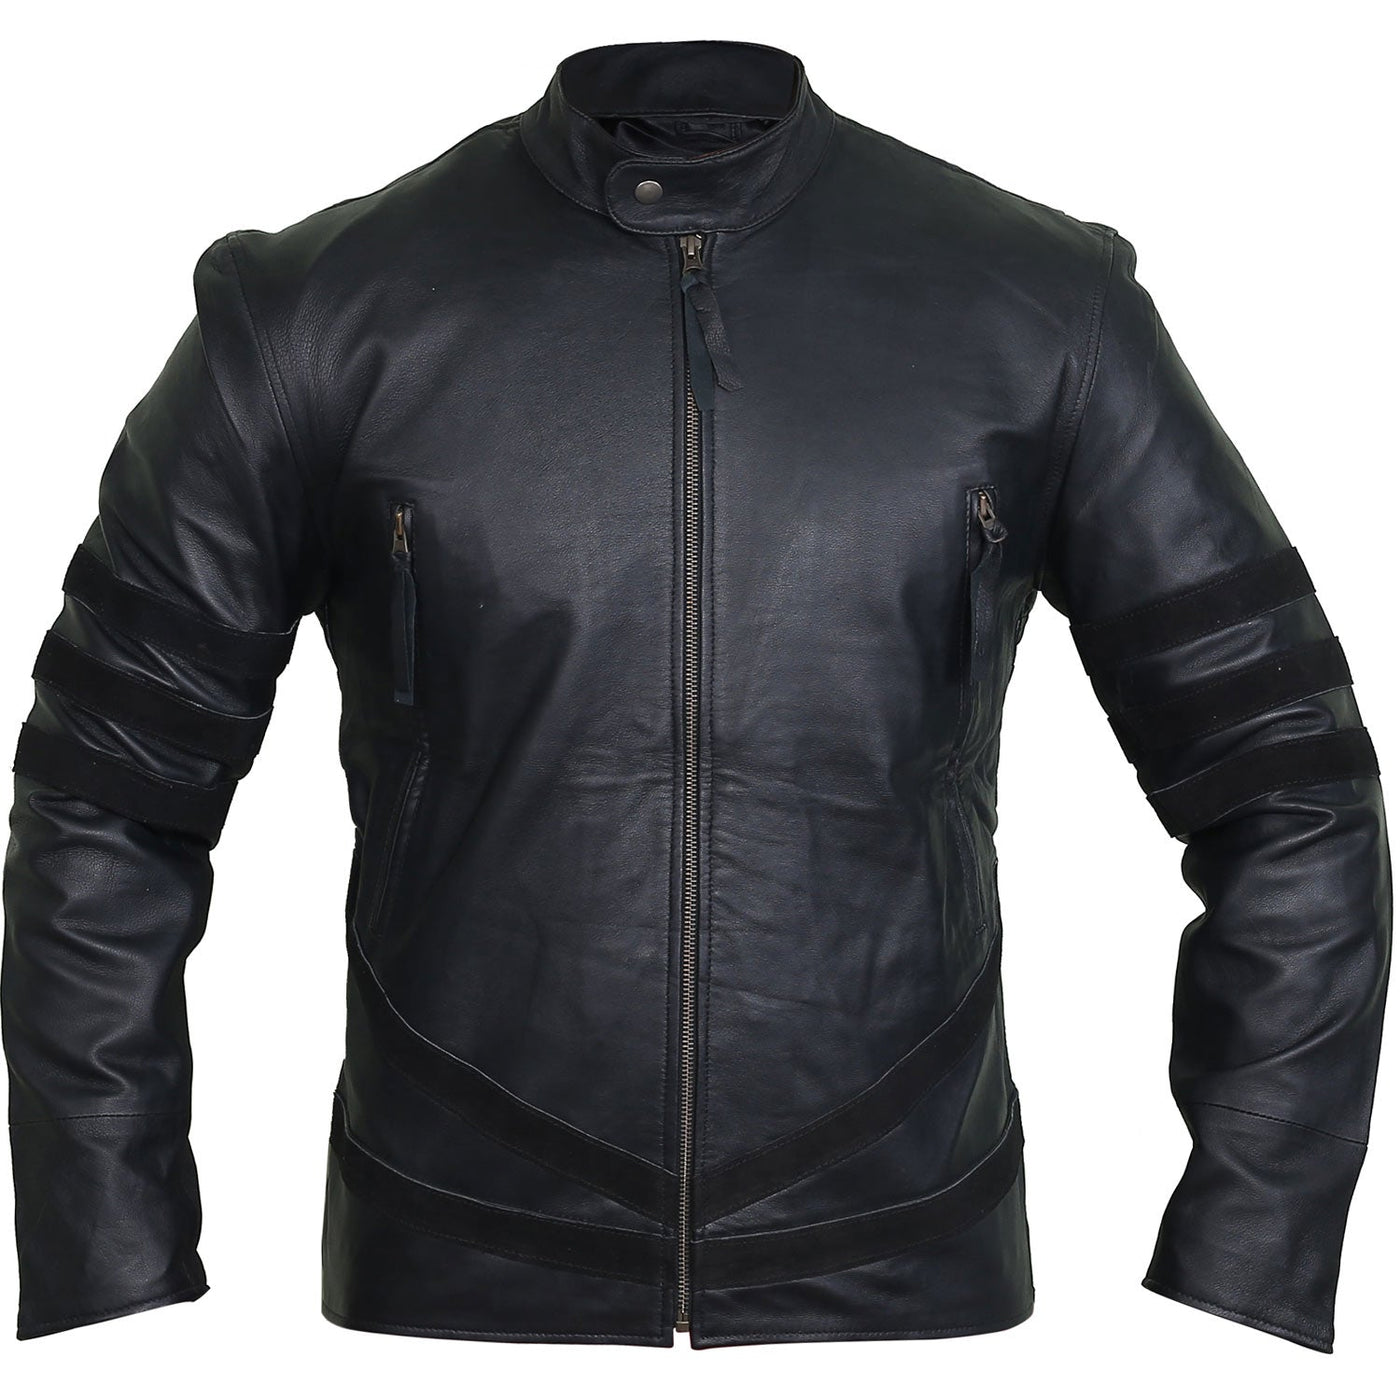 James Black Striped Leather Jacket Front Pose